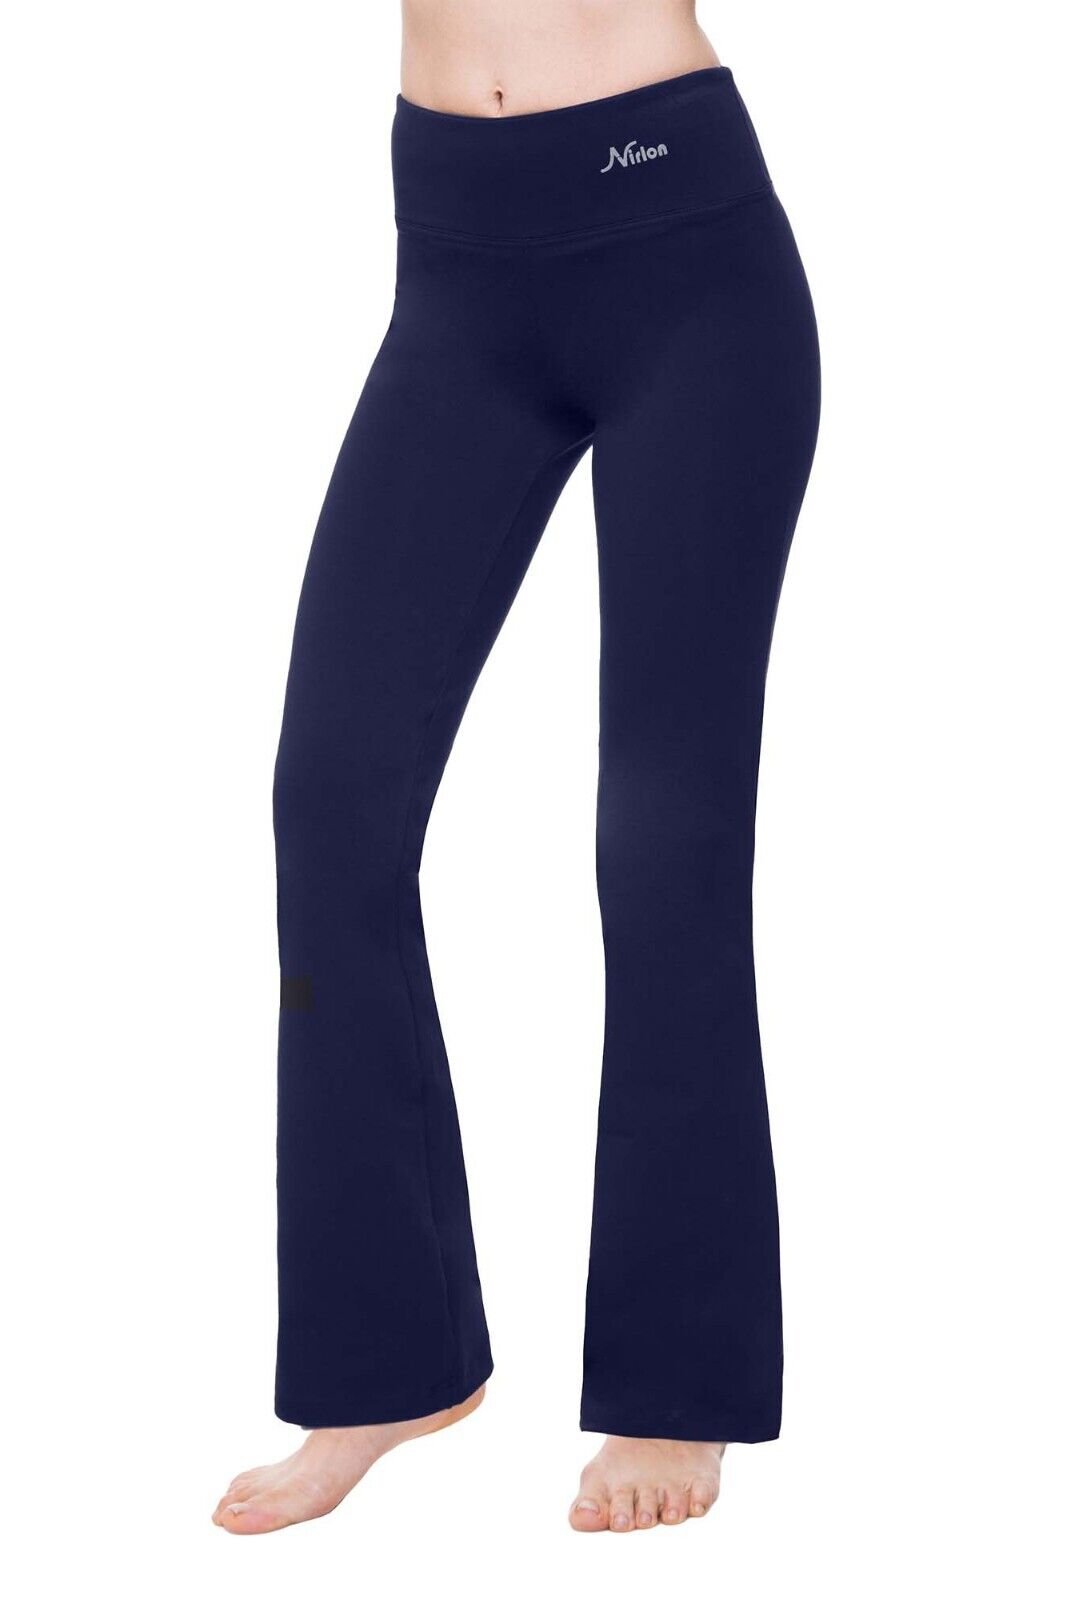 Nirlon Bootcut Yoga Pants - Wide Leg Pants, Dressy Flare Leggings